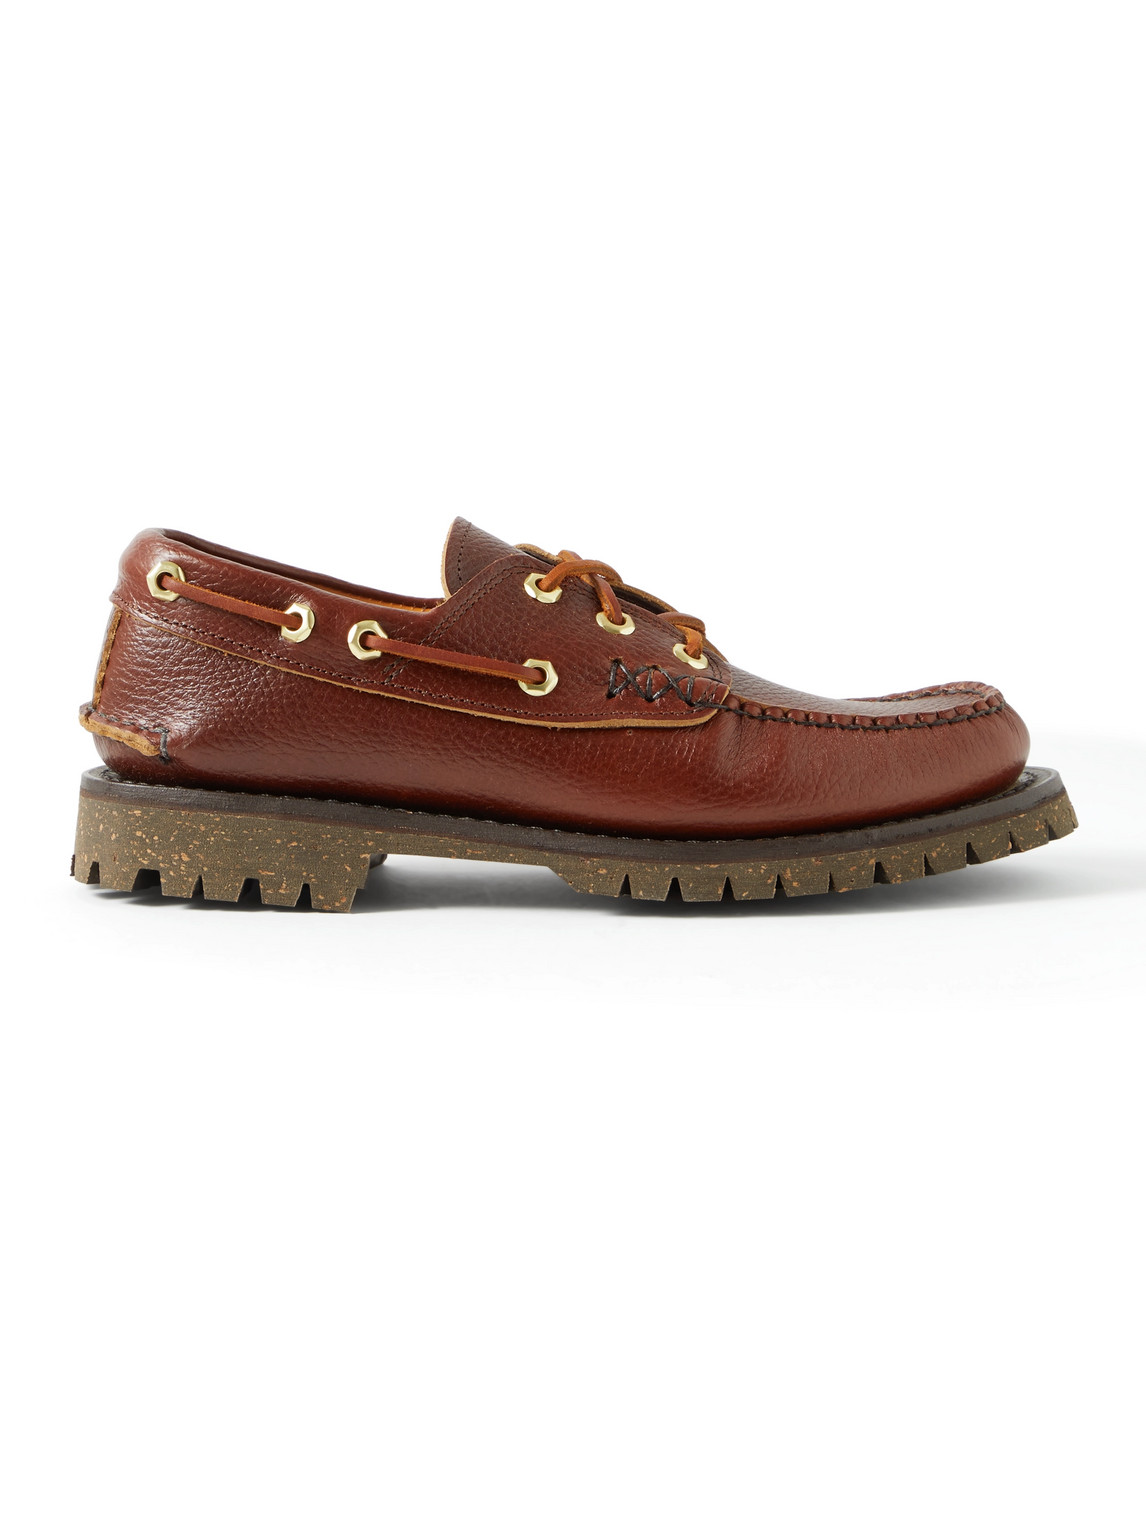 Yuketen Full-grain Leather Boat Shoes In Brown